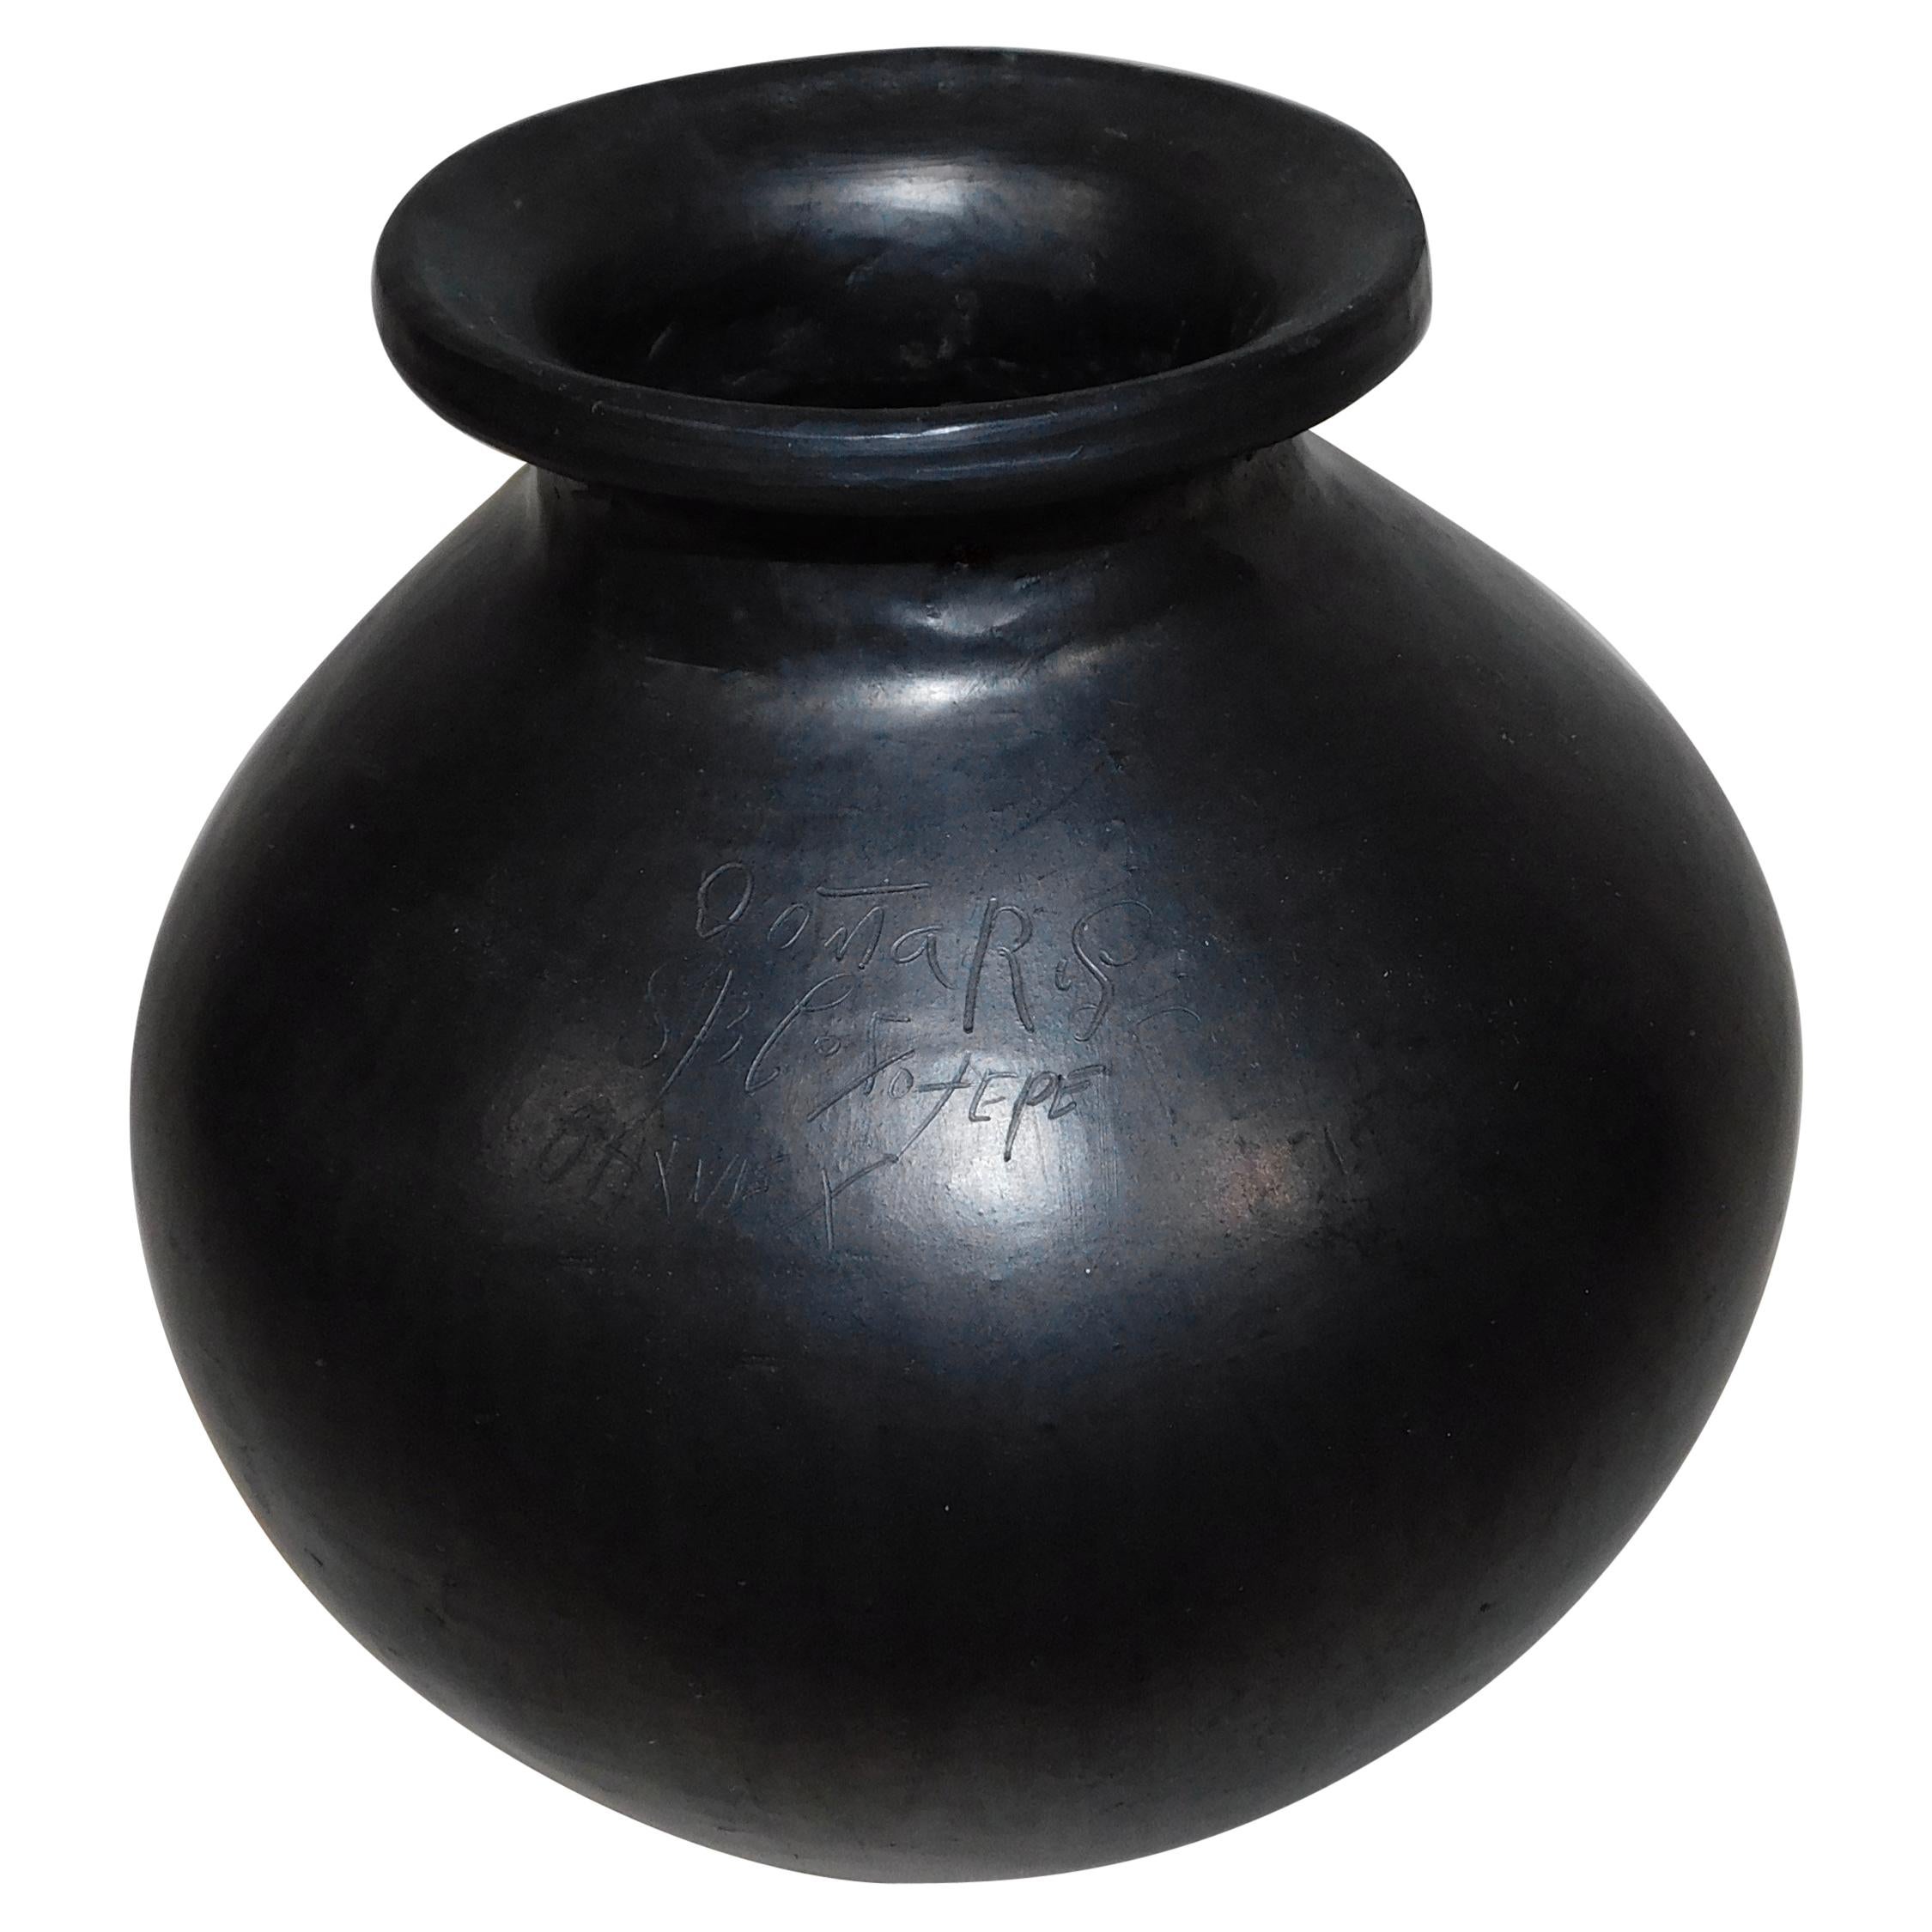 Oaxaca Mexico Large Black Art Pottery Vase Signed Dona Rosa